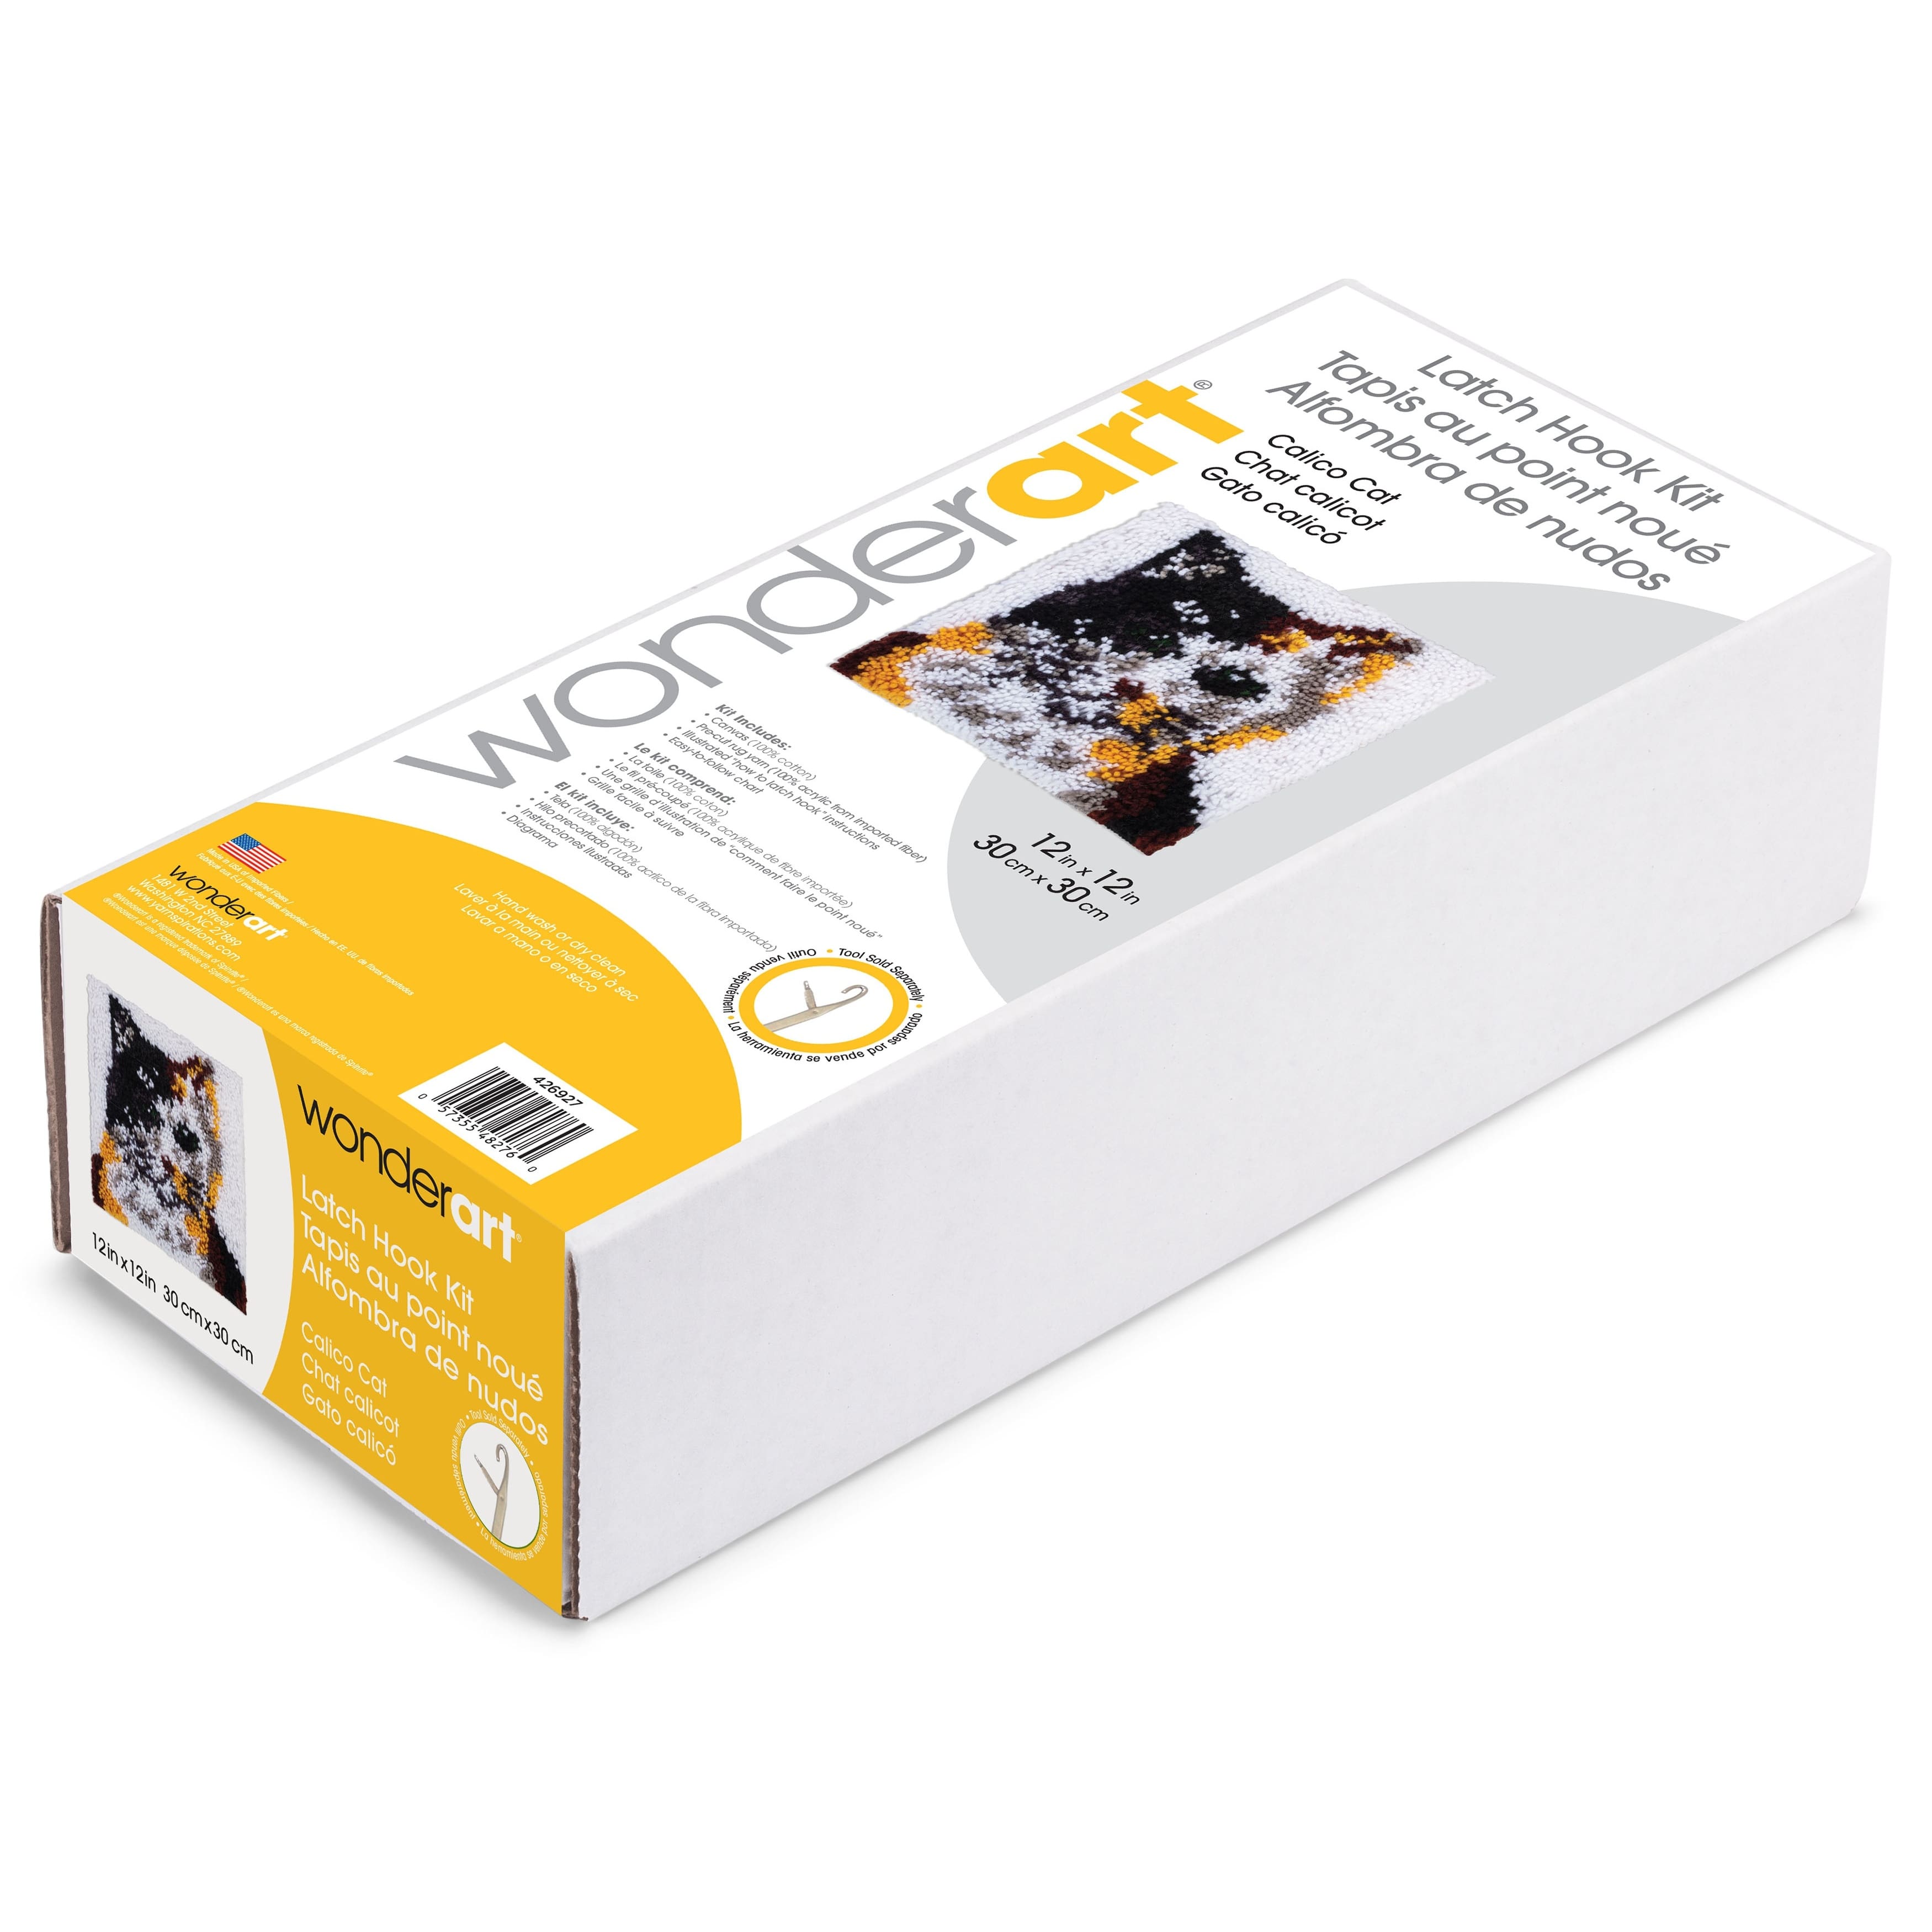 Wonderart&#xAE; Calico Cat Latch Hook Kit